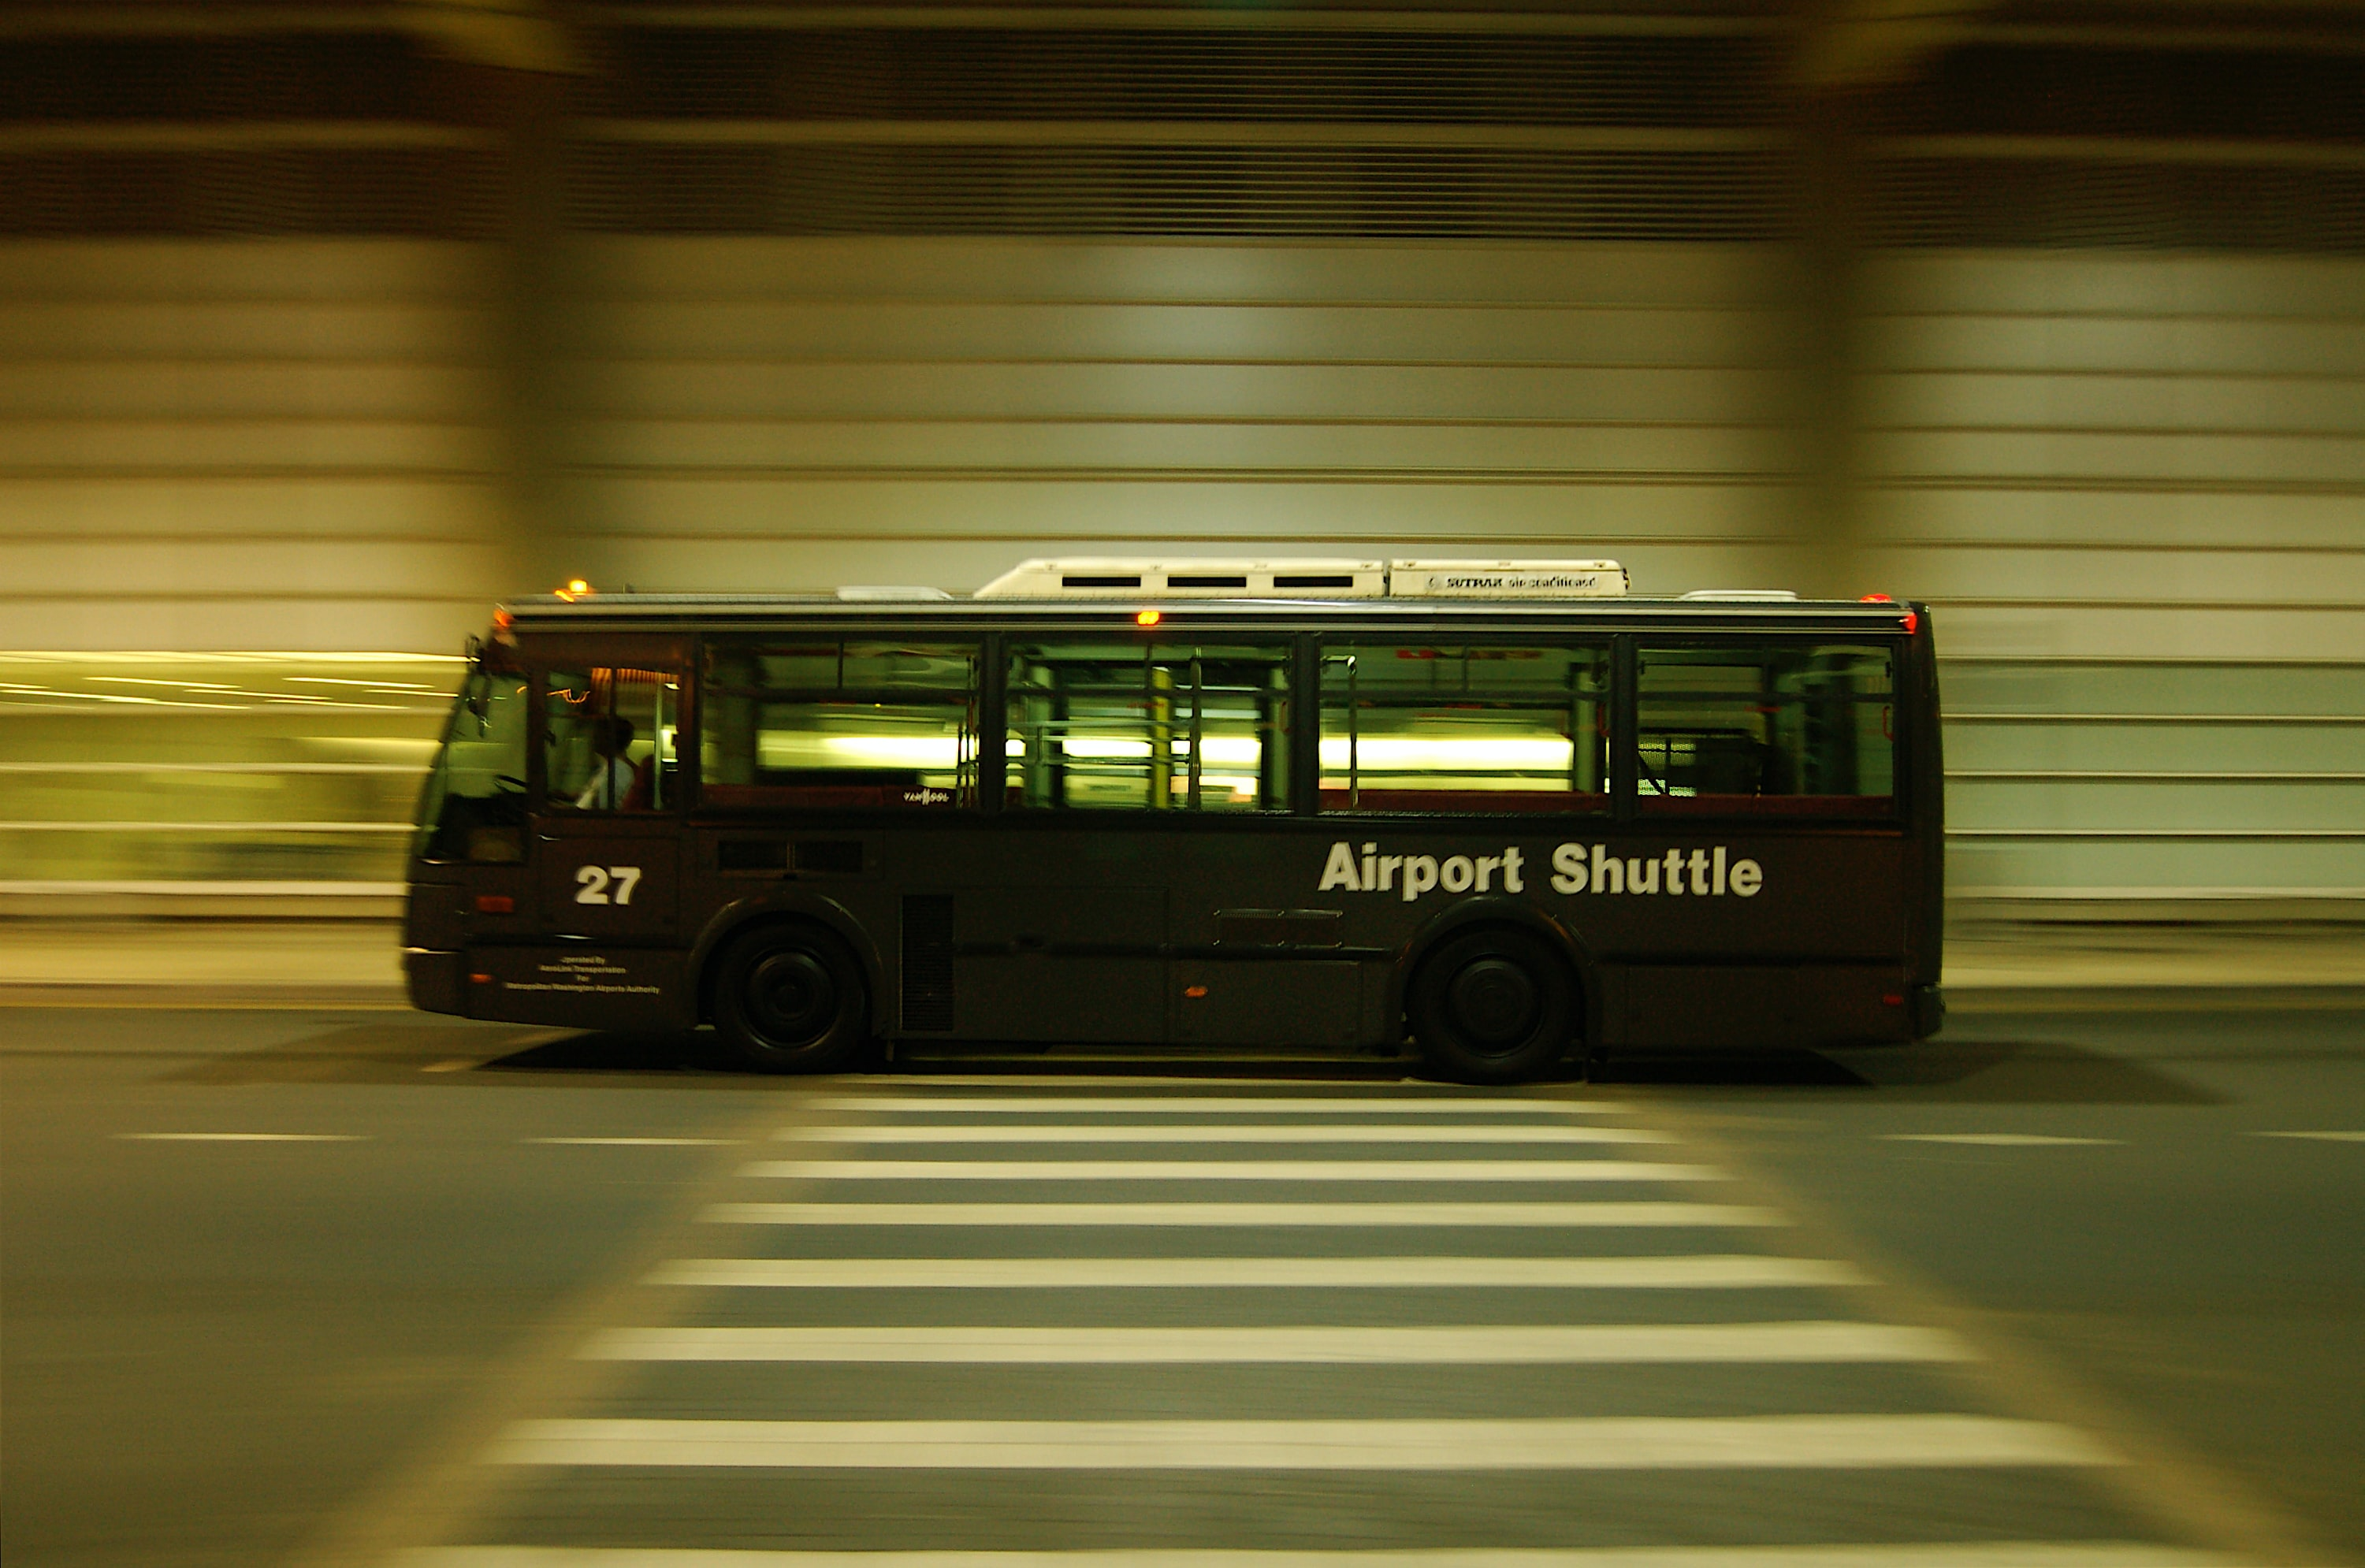 Gatwick airport bus service image